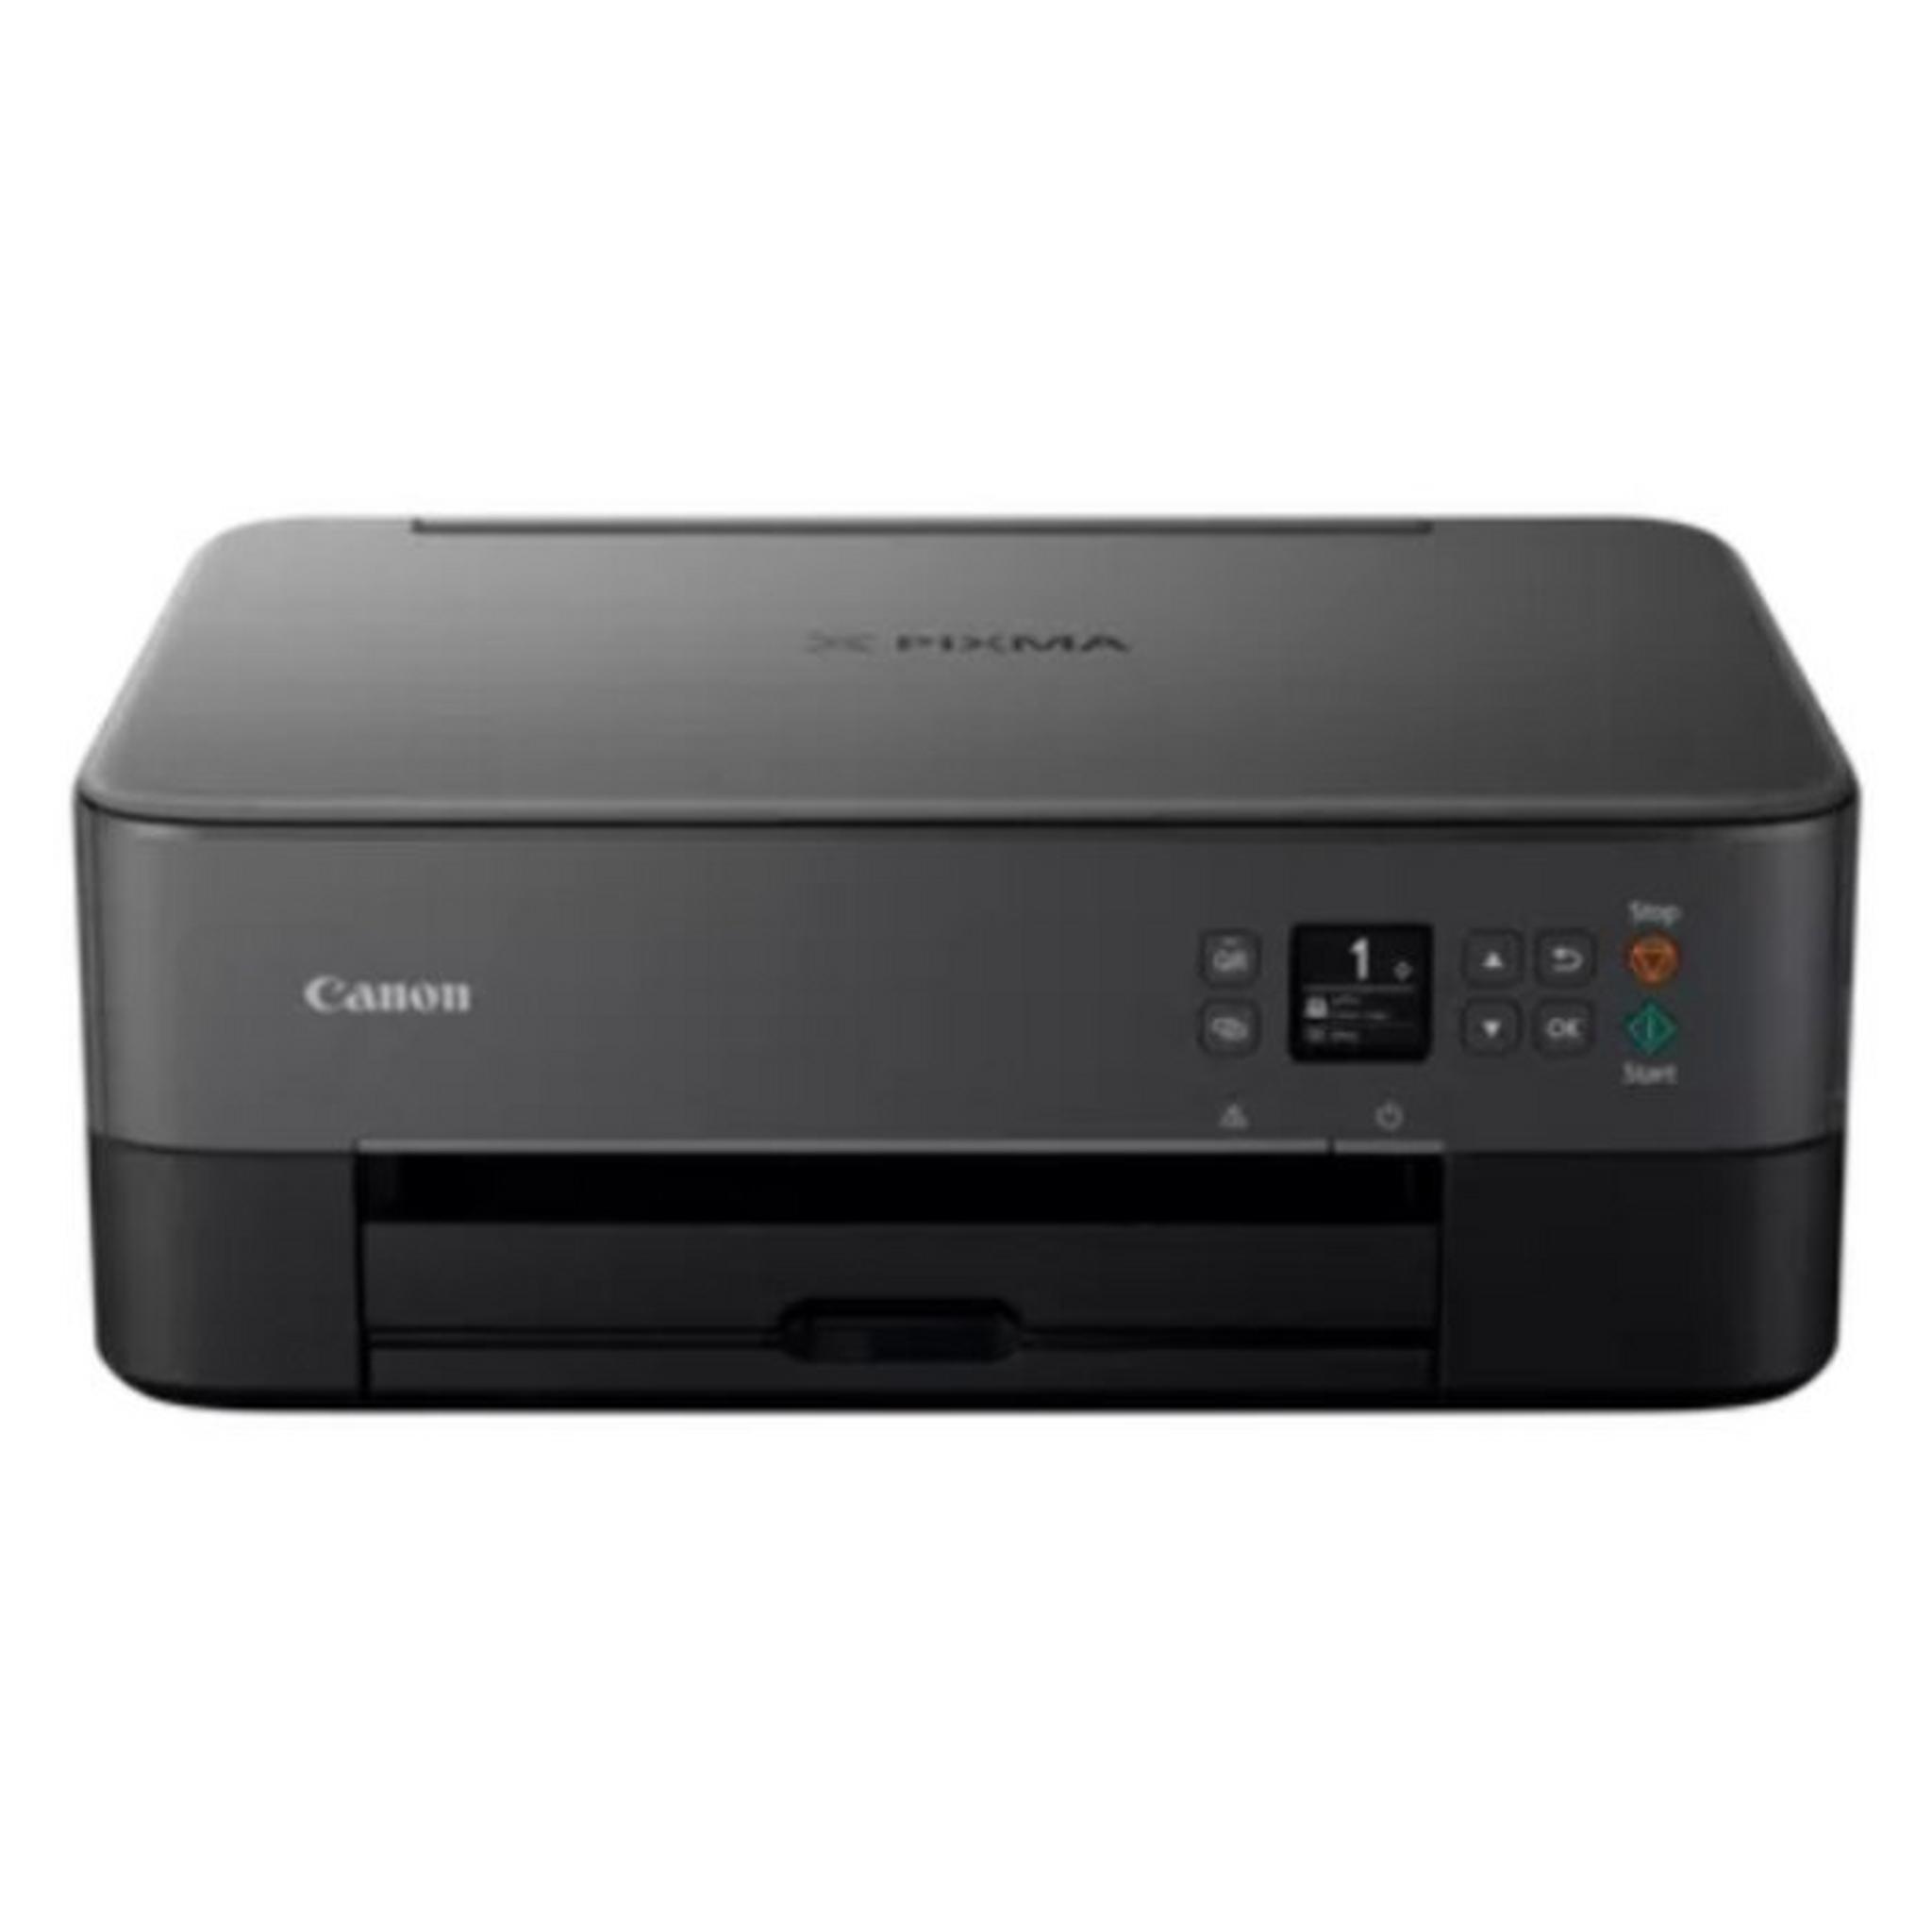 Canon Pixma InkJet 3 in 1 Printer, TS5340a - Black